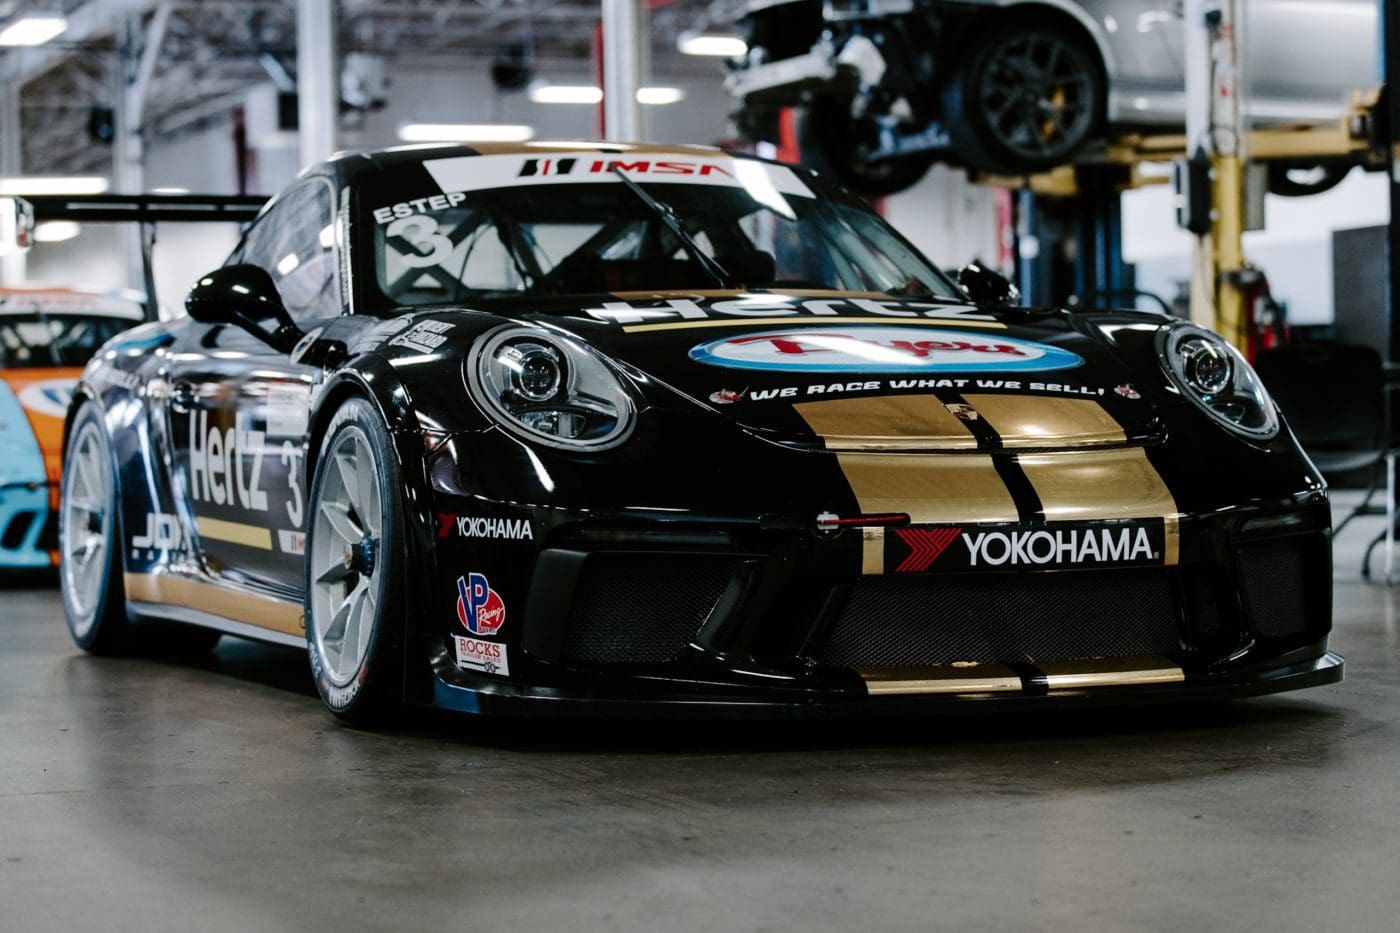 For Sale: Championship Winning 2018 Porsche 911 GT3 Cup Car